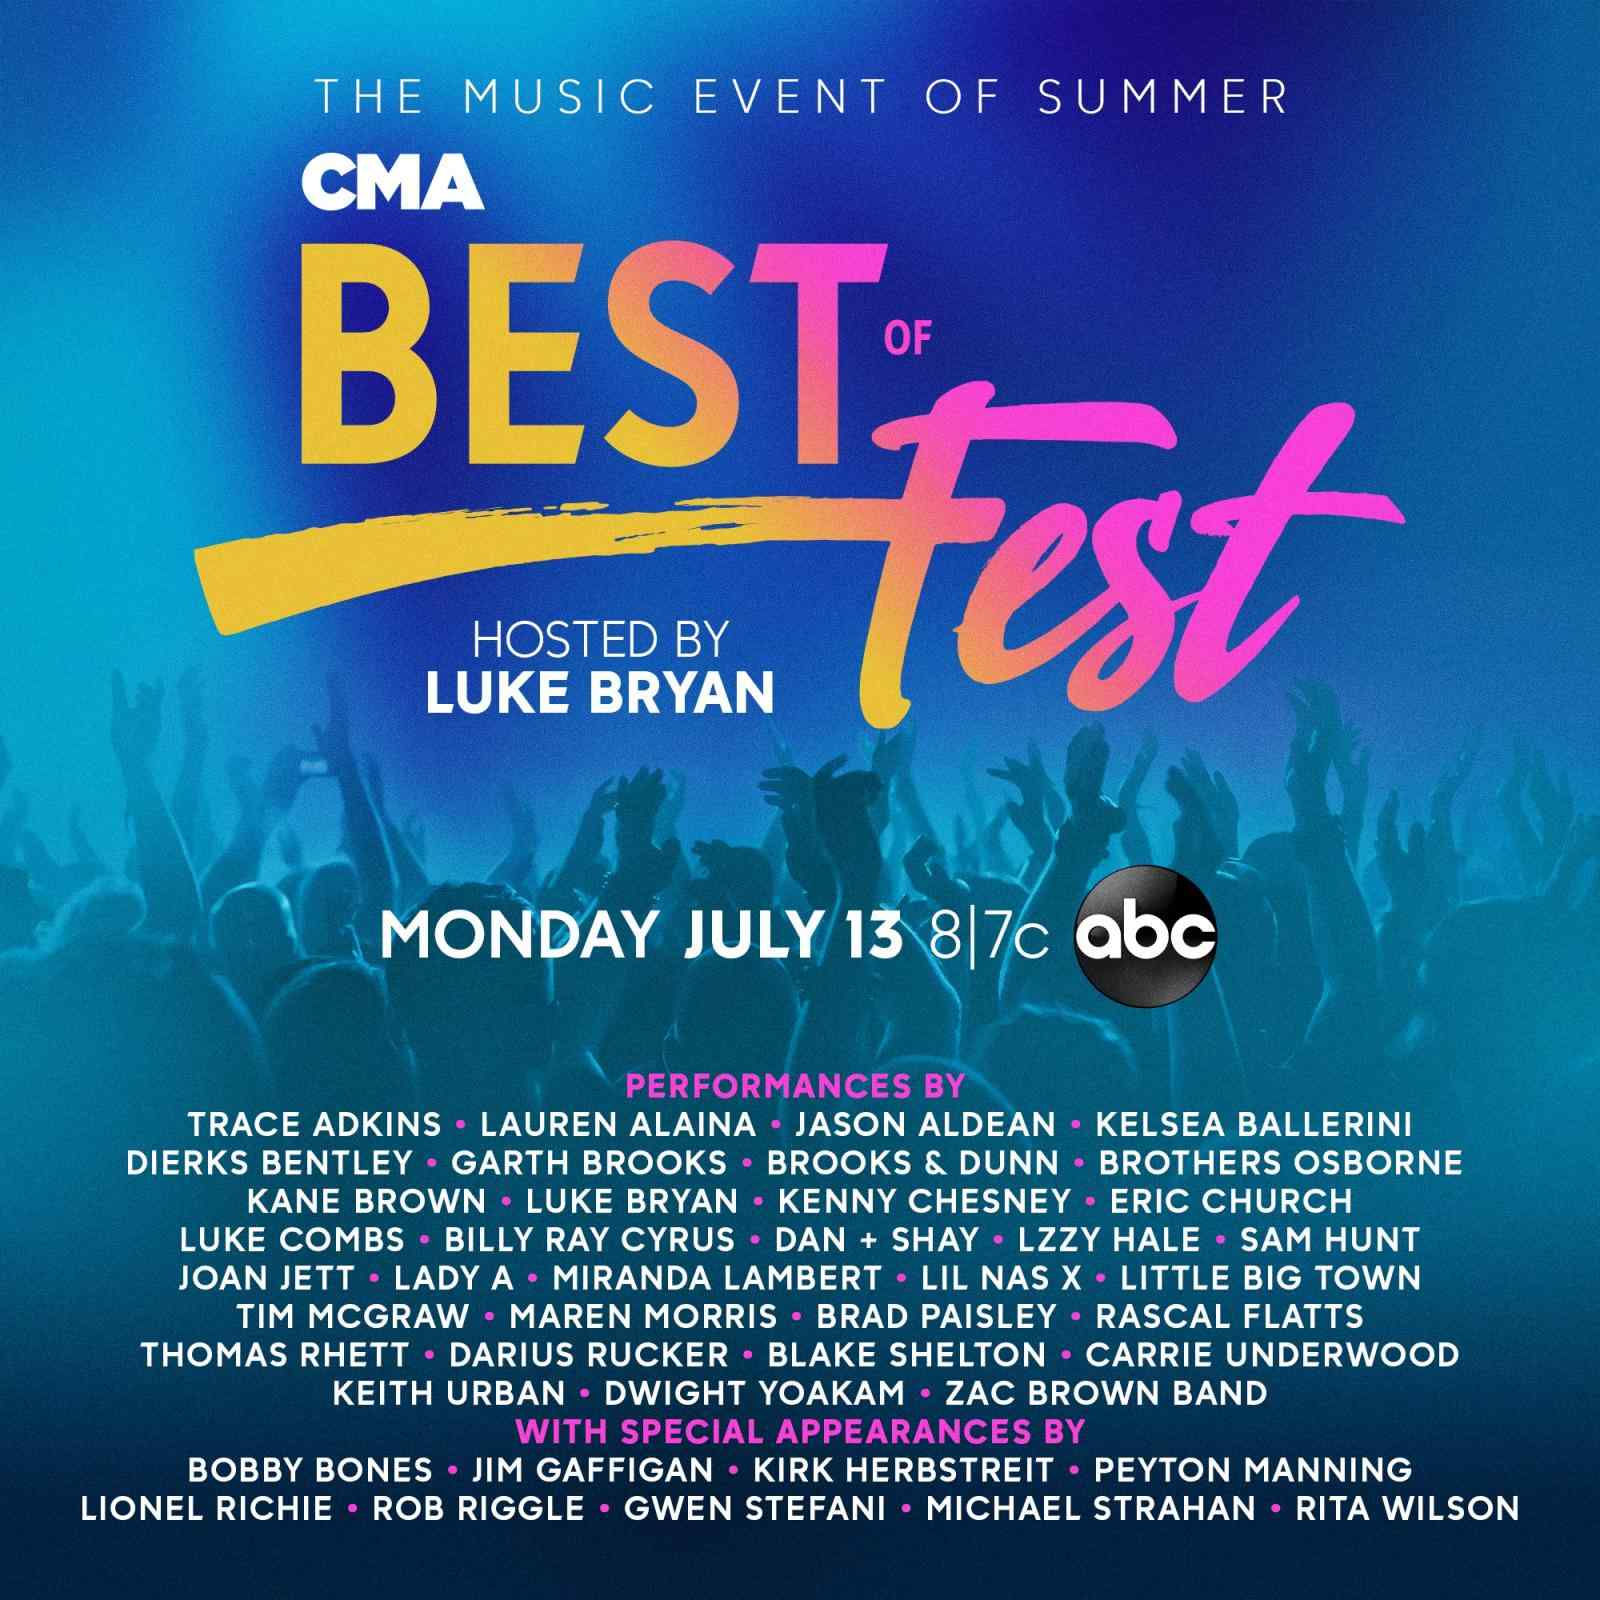 LUKE BRYAN TO HOST "CMA BEST OF FEST" AIRING MONDAY, JULY 13 ON ABC